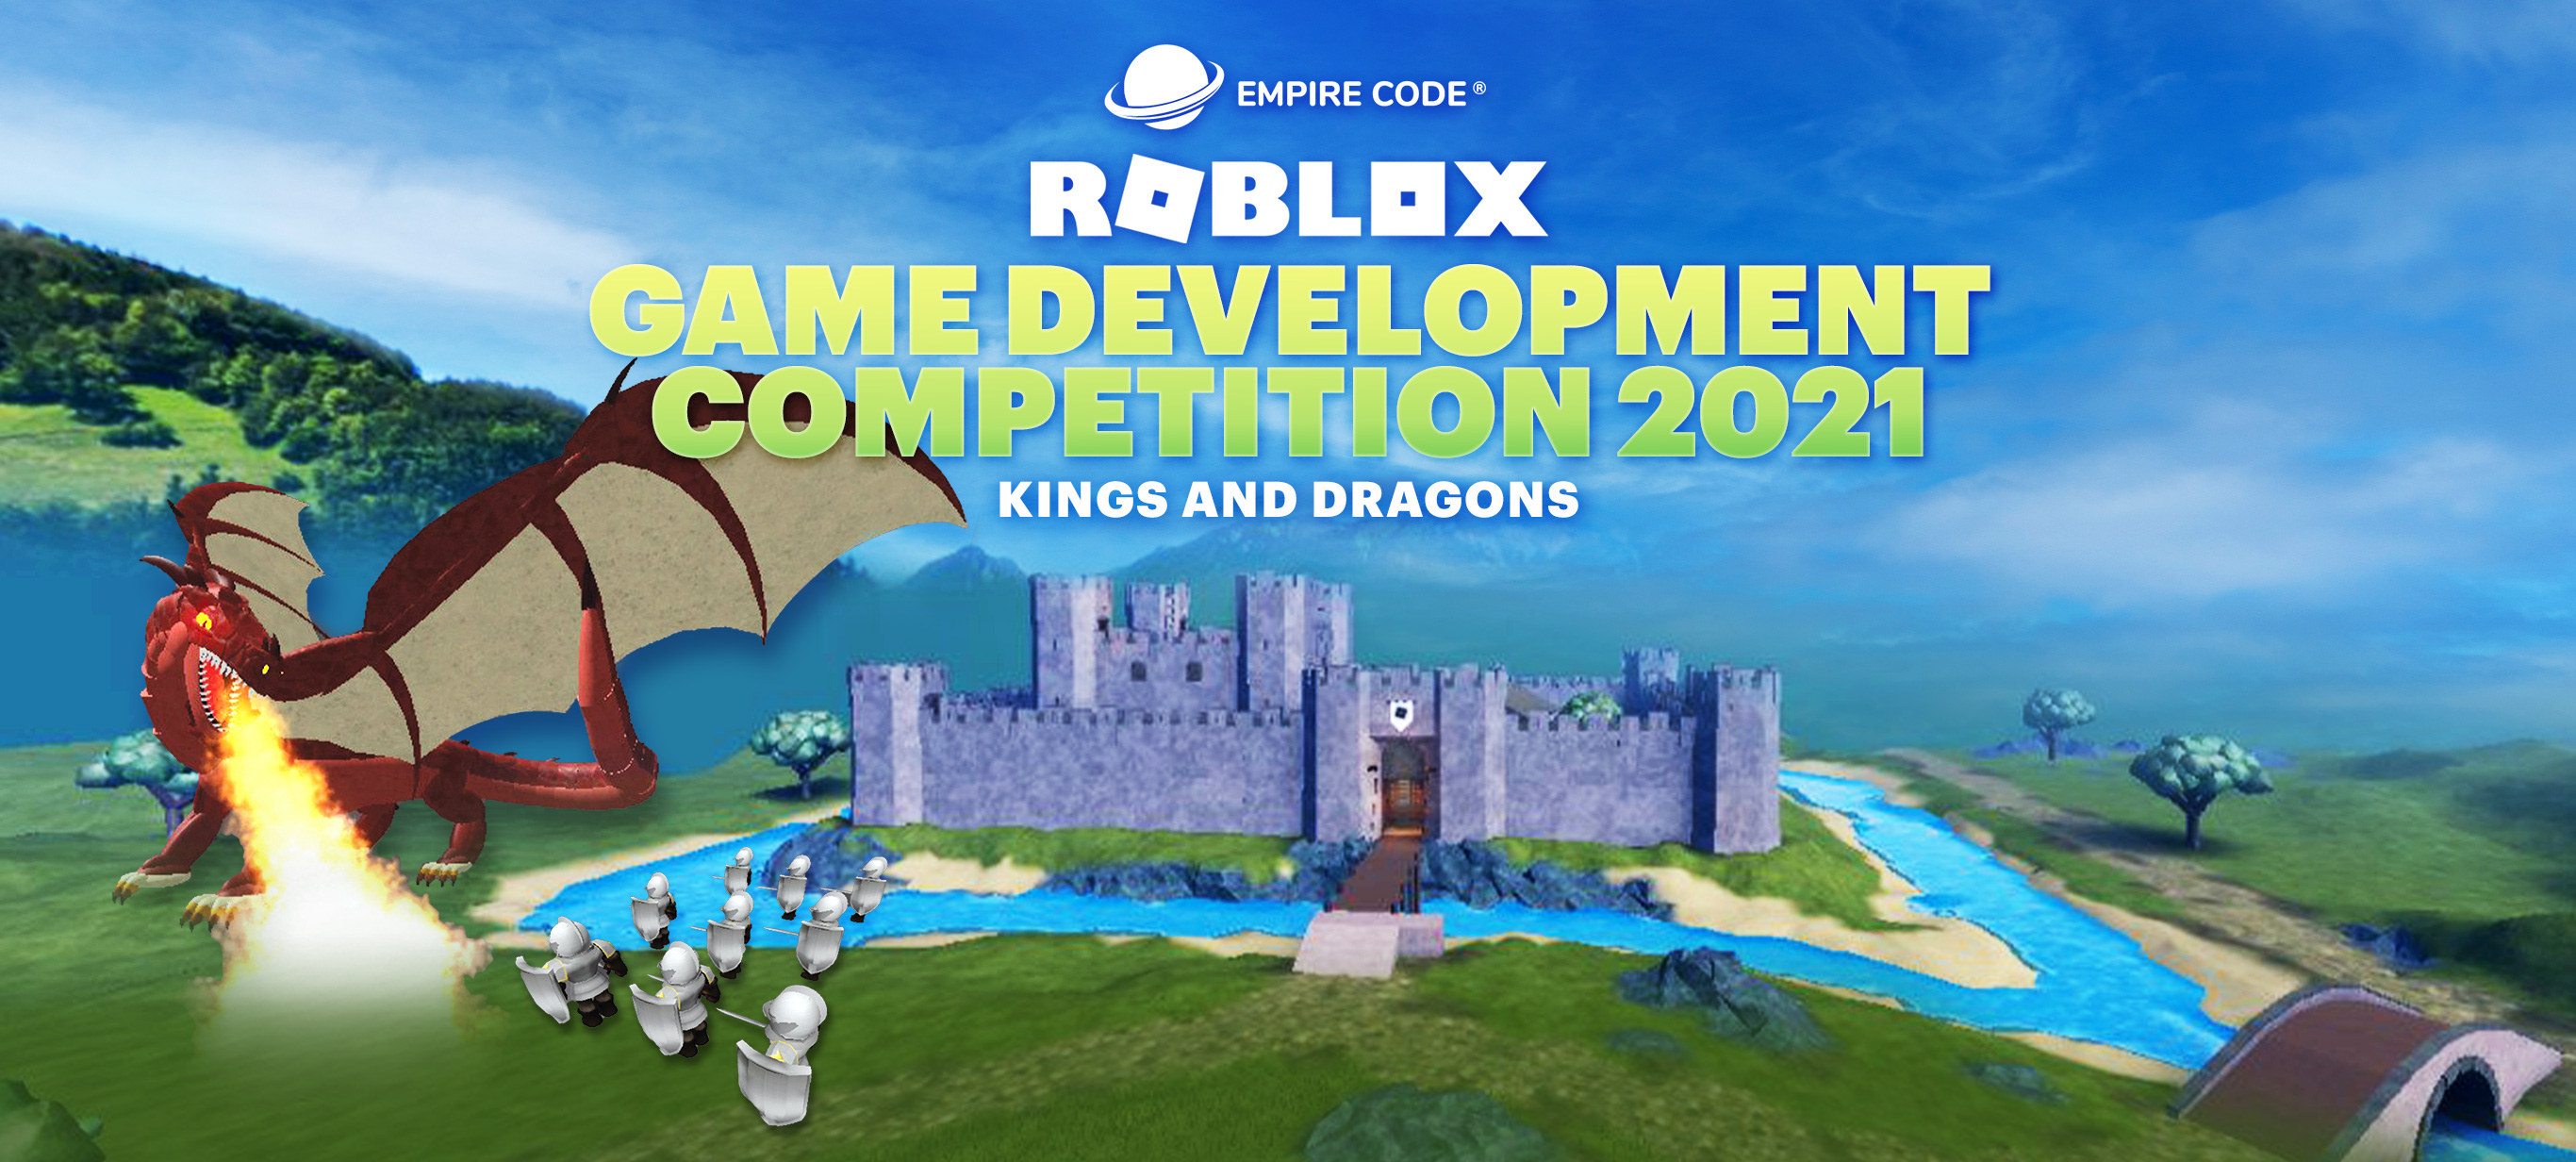 Empire Code Roblox Game Development Competition 2023 - Empire Code  Education Centre Event